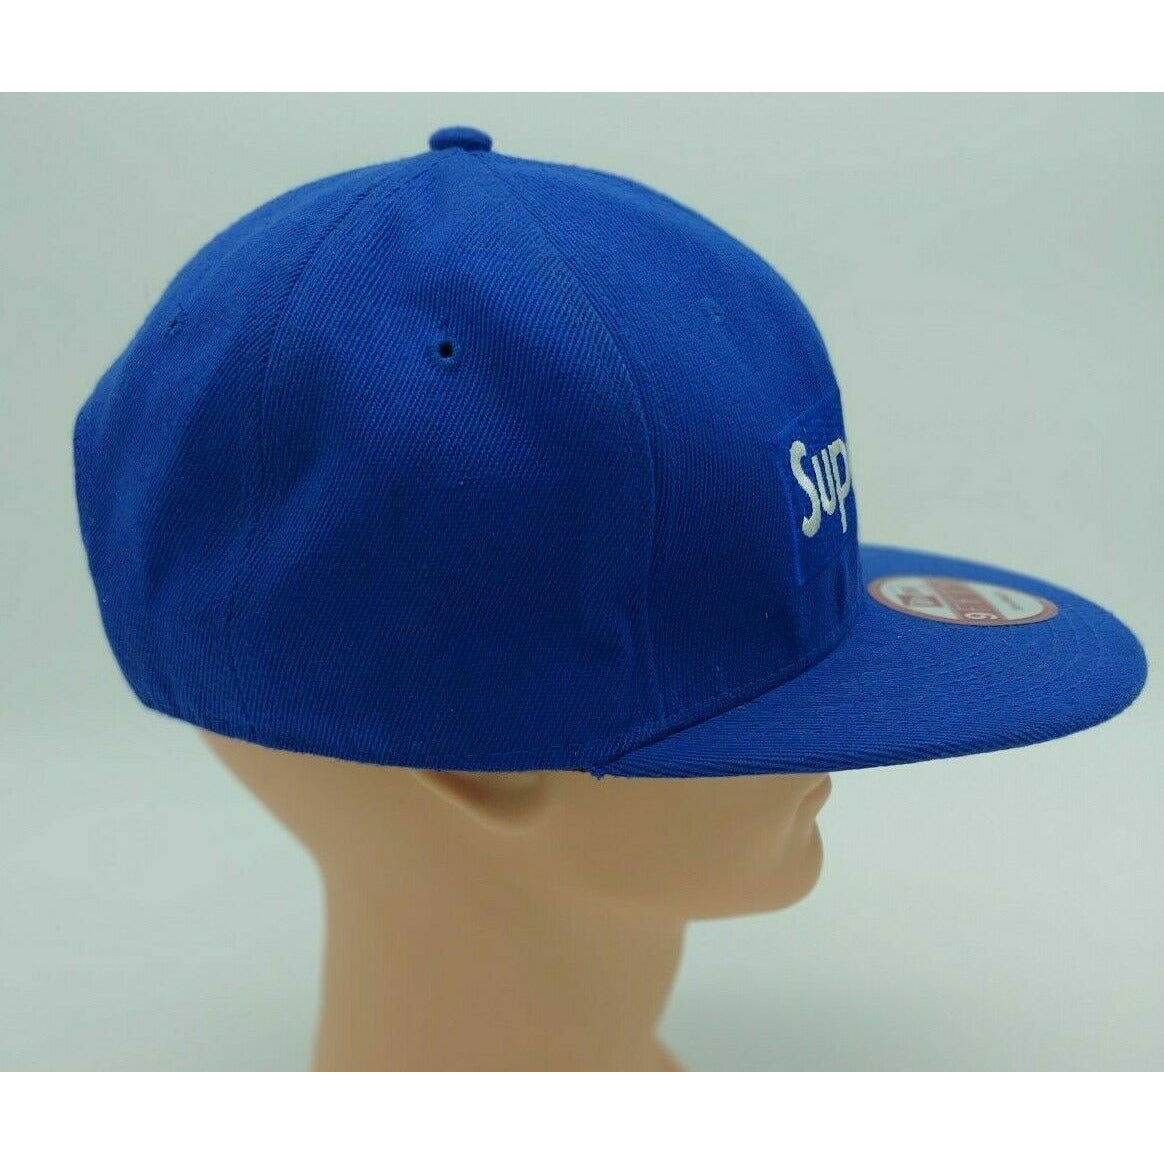 Box logo hat Supreme Blue size M International in Cotton - 31047641